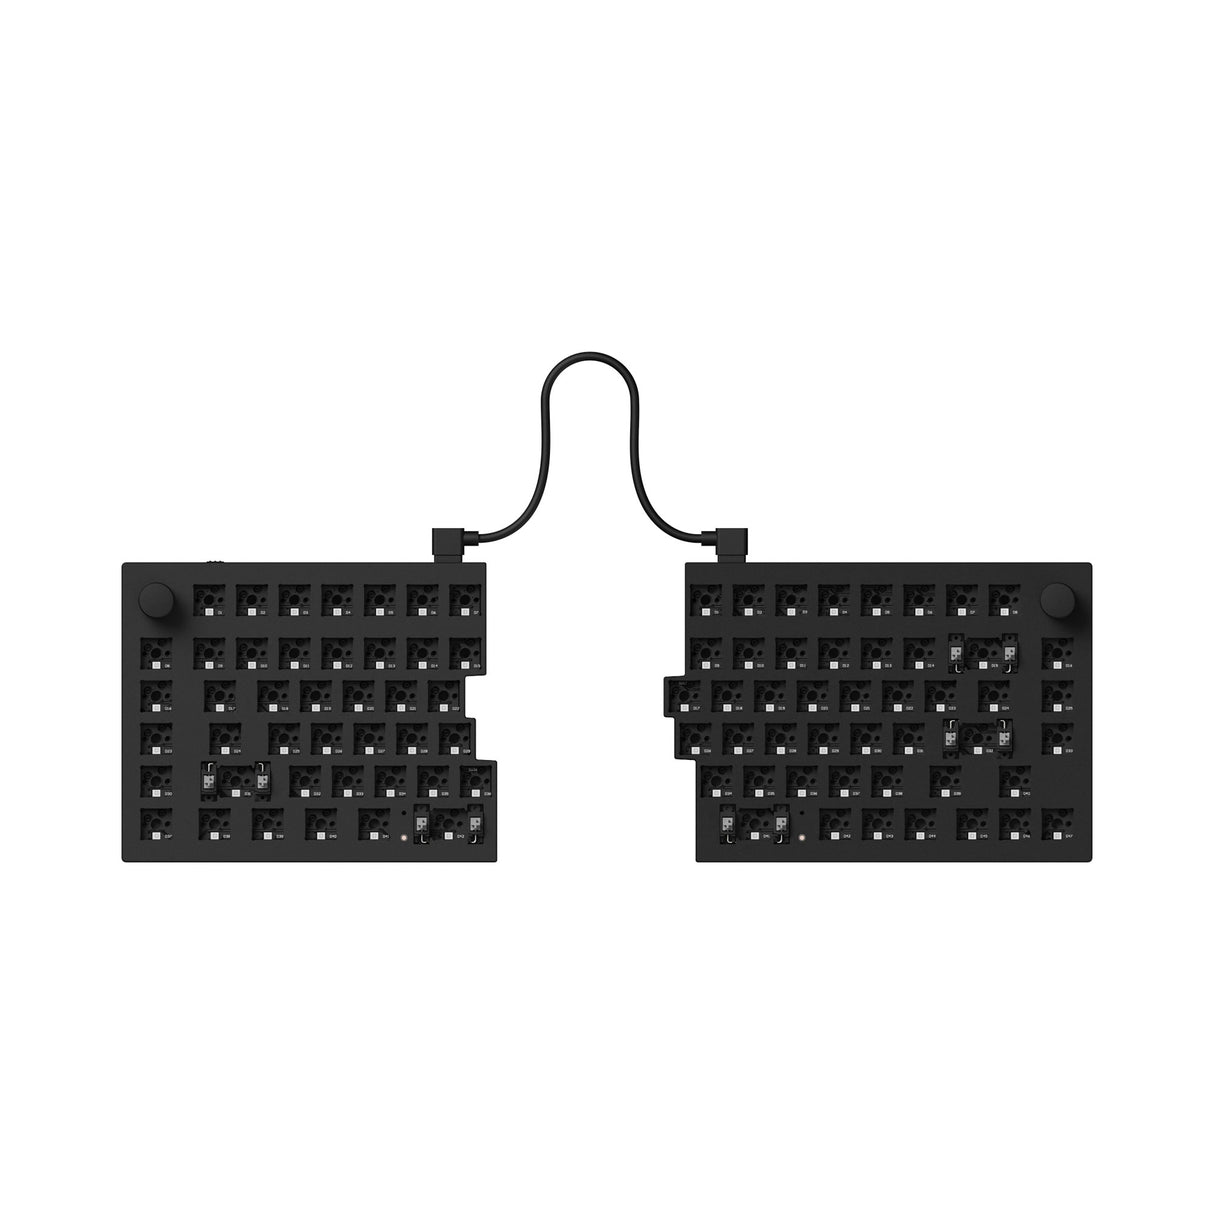 Keychron Q11 QMK/VIA 75% split custom mechanical keyboard full aluminum frame for Mac Window Linux black barebone